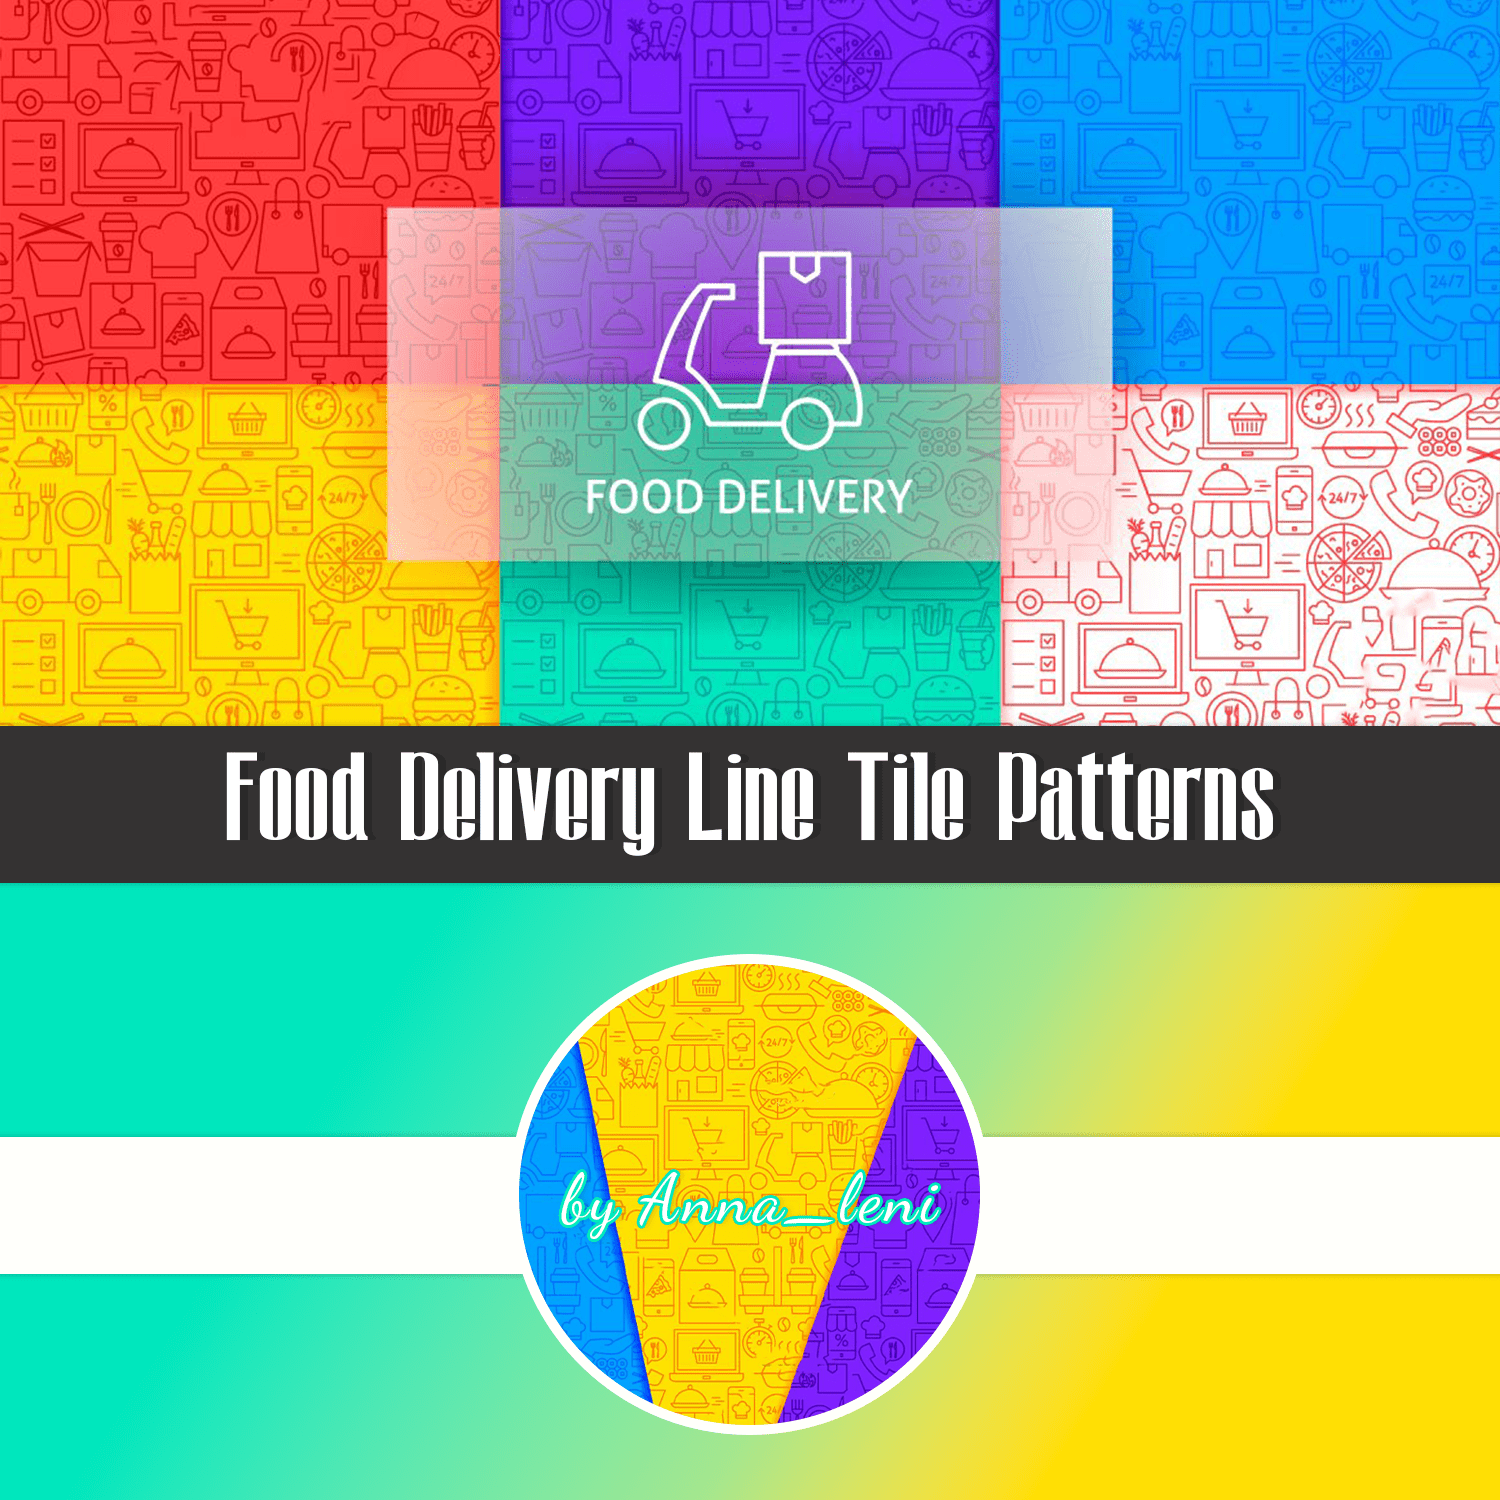 Food Delivery Line Tile Patterns cover.